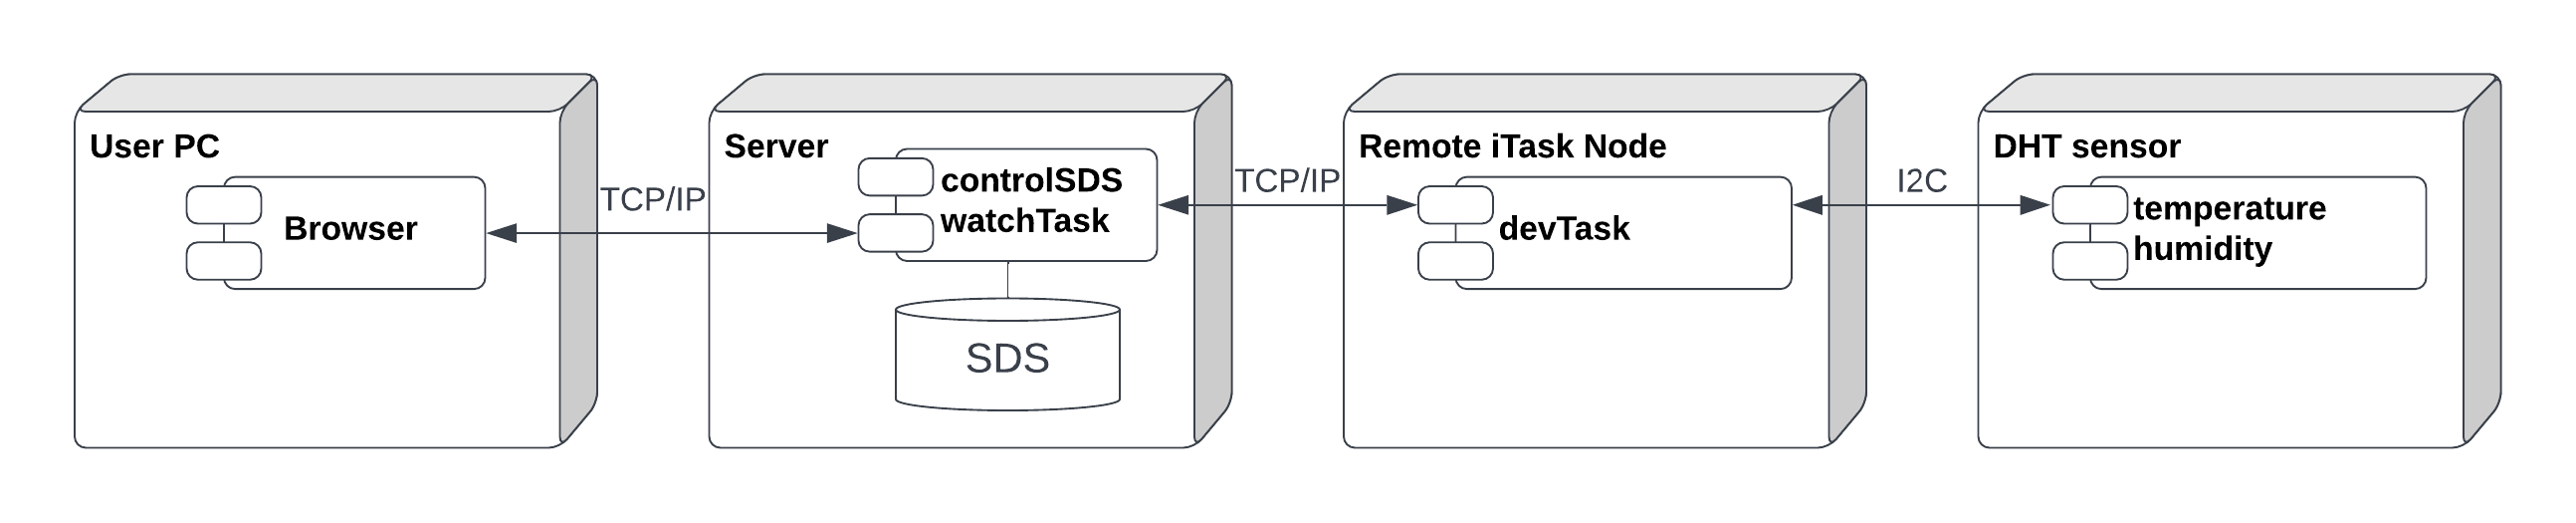 tiered_vs._tierless_programming/img/iTaskTempRemote.png